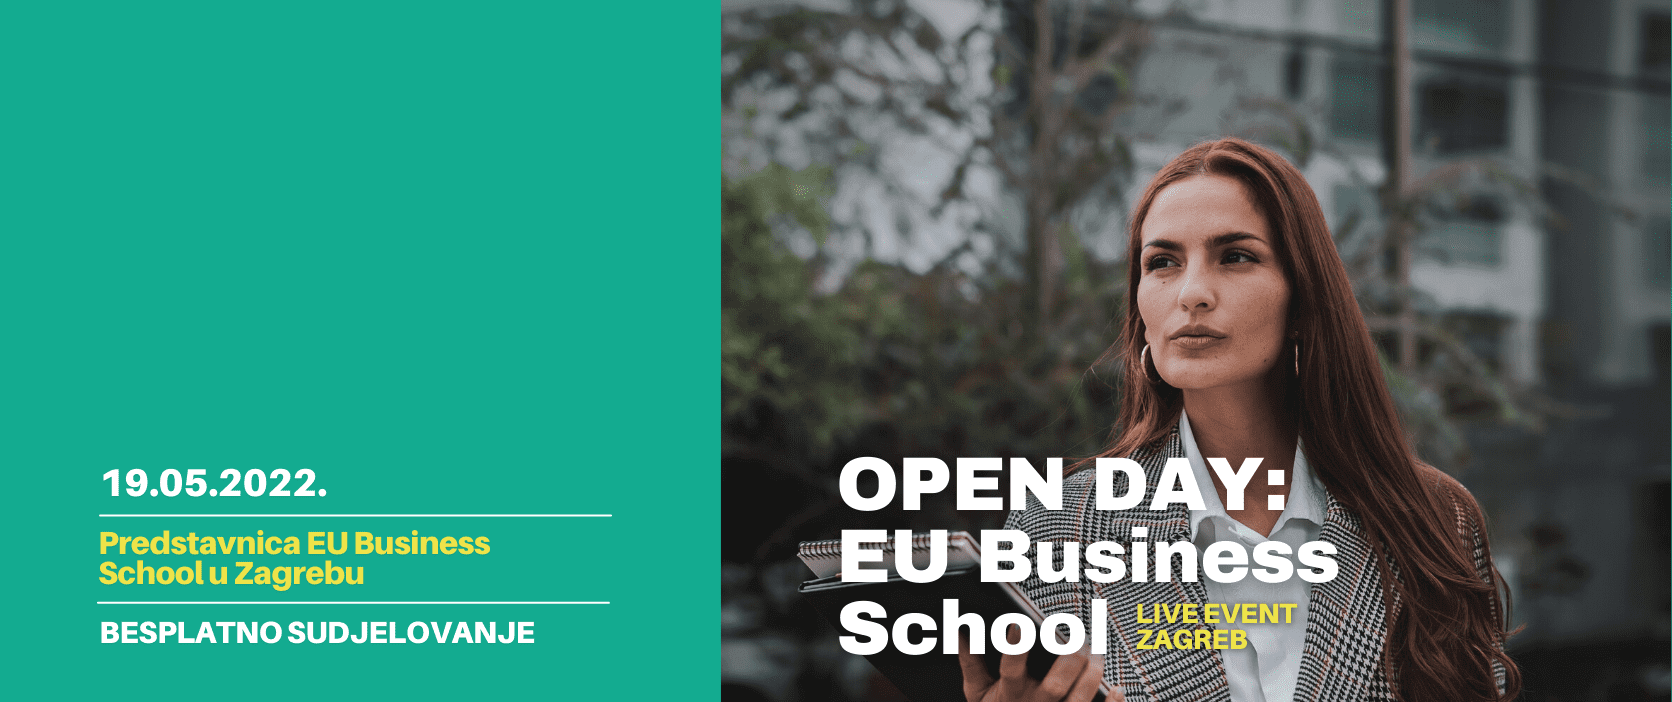 Open Day EU Business School